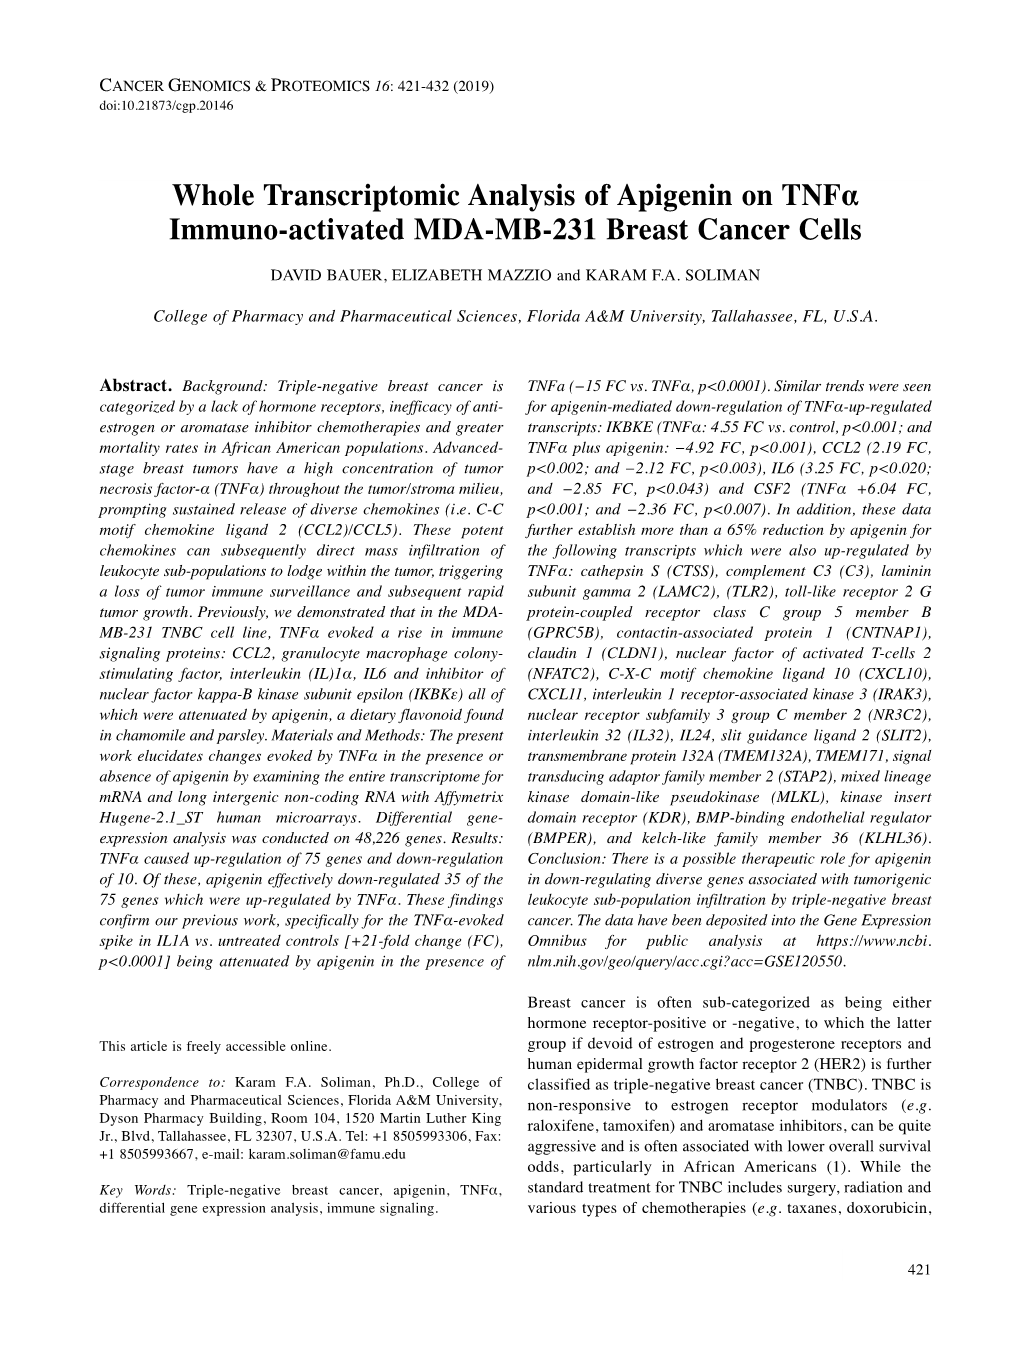 Whole Transcriptomic Analysis of Apigenin on TNF Α Immuno-Activated MDA-MB-231 Breast Cancer Cells DAVID BAUER, ELIZABETH MAZZIO and KARAM F.A